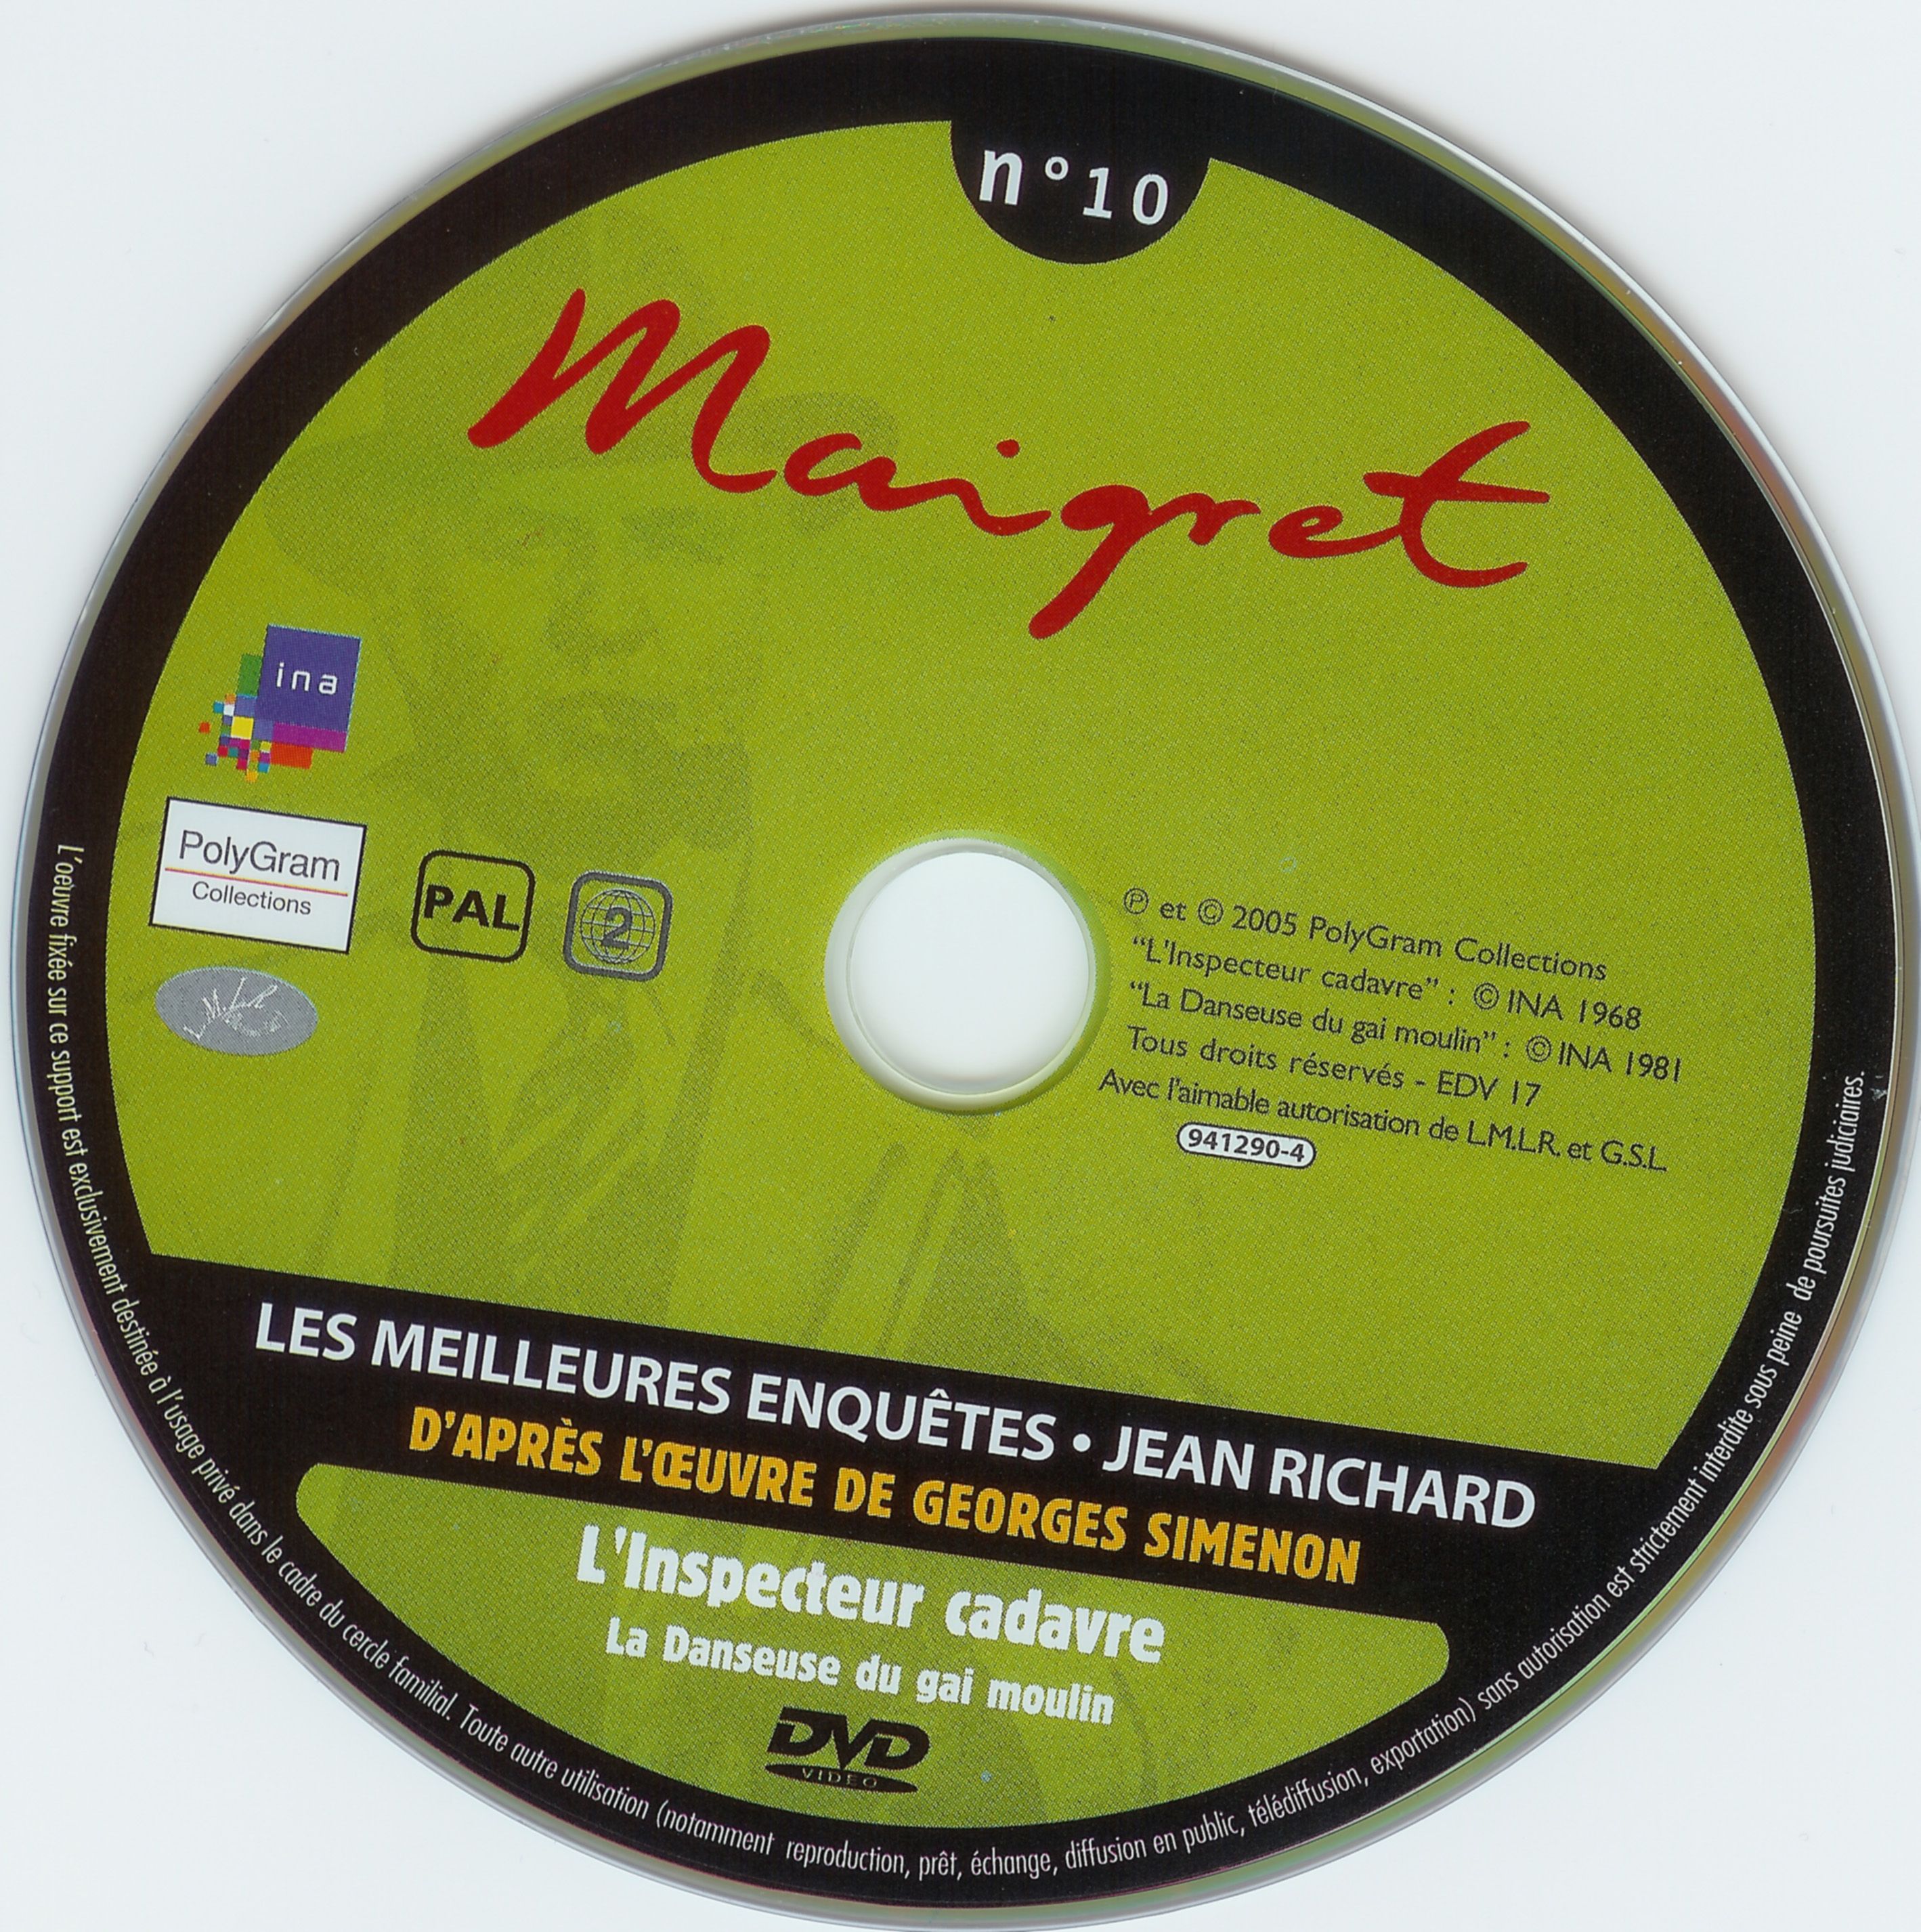 Maigret (Jean Richard) vol 10